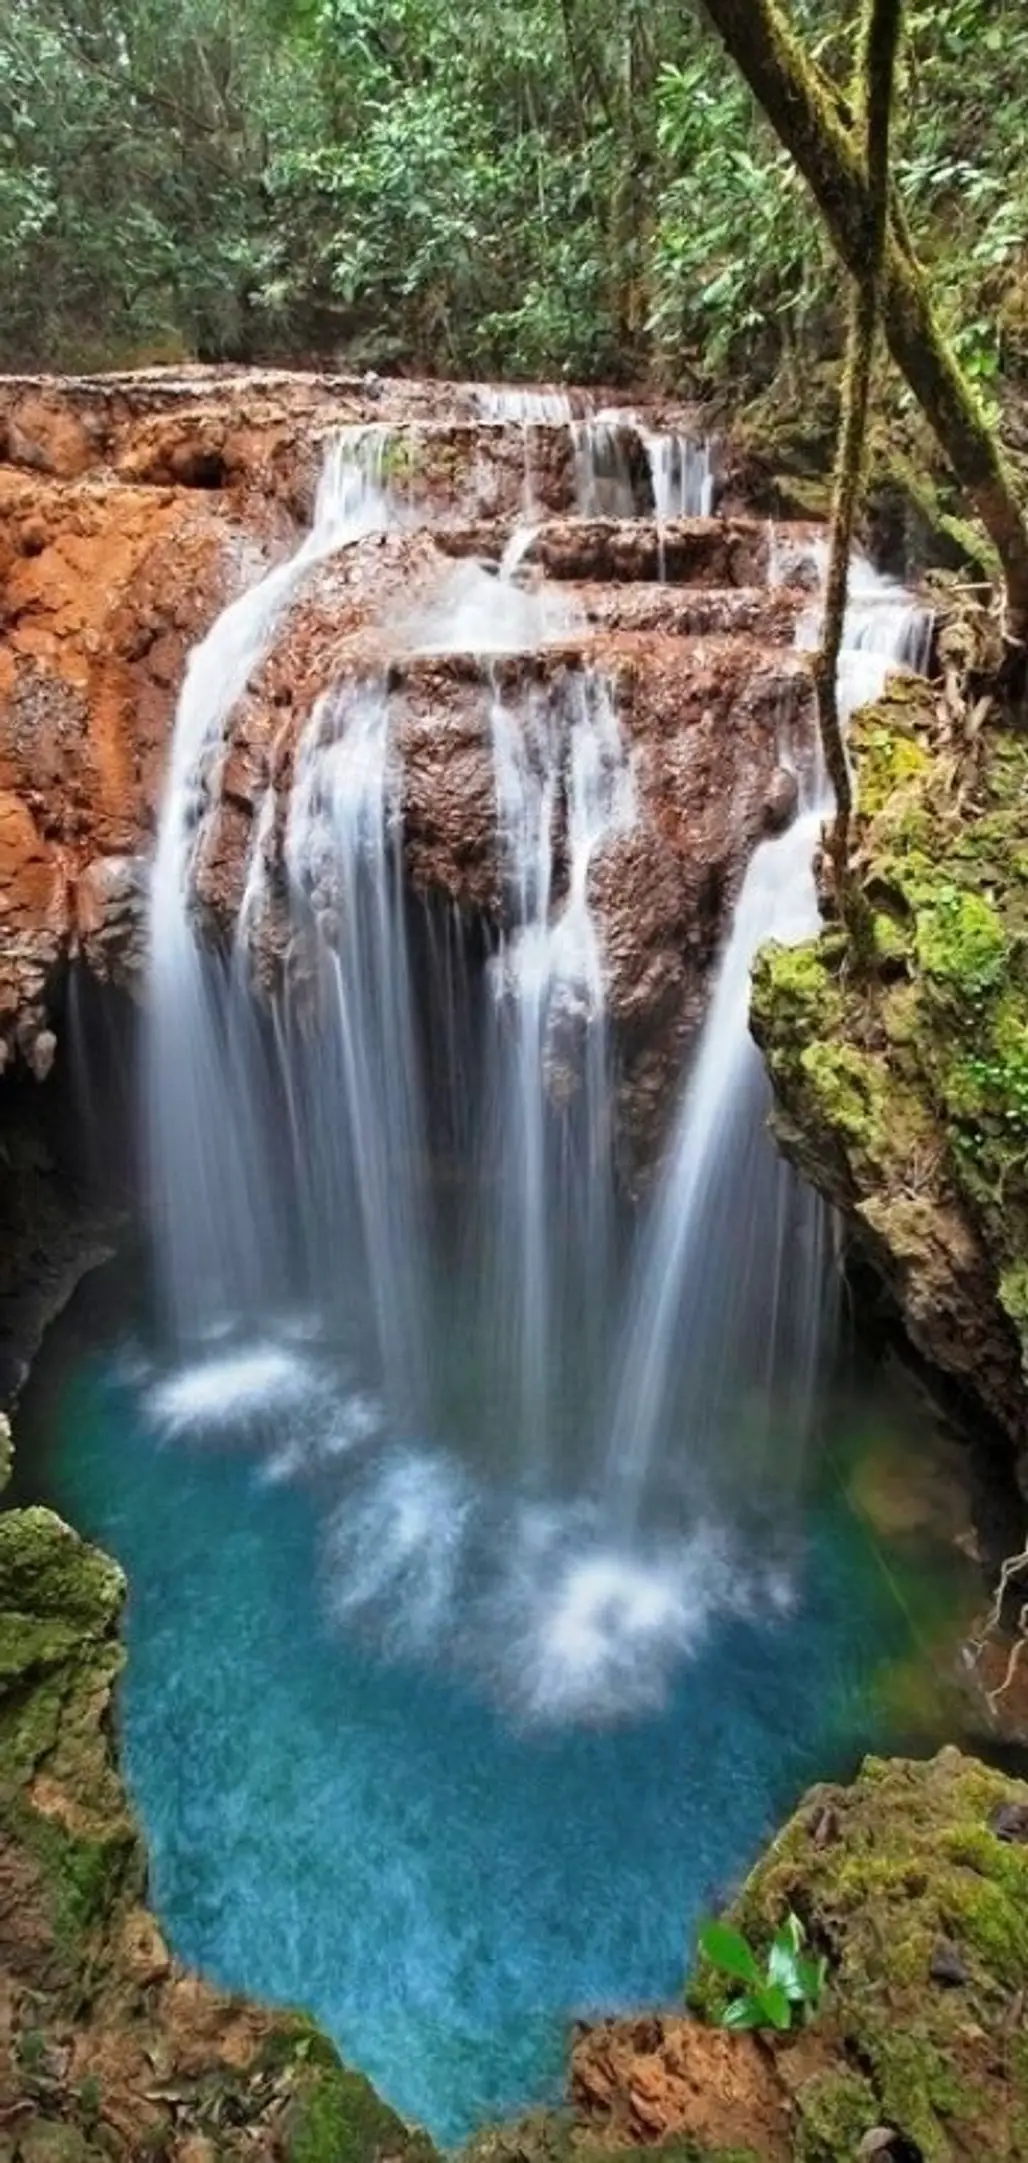 Monkey’s Hole Waterfalls, Brazil